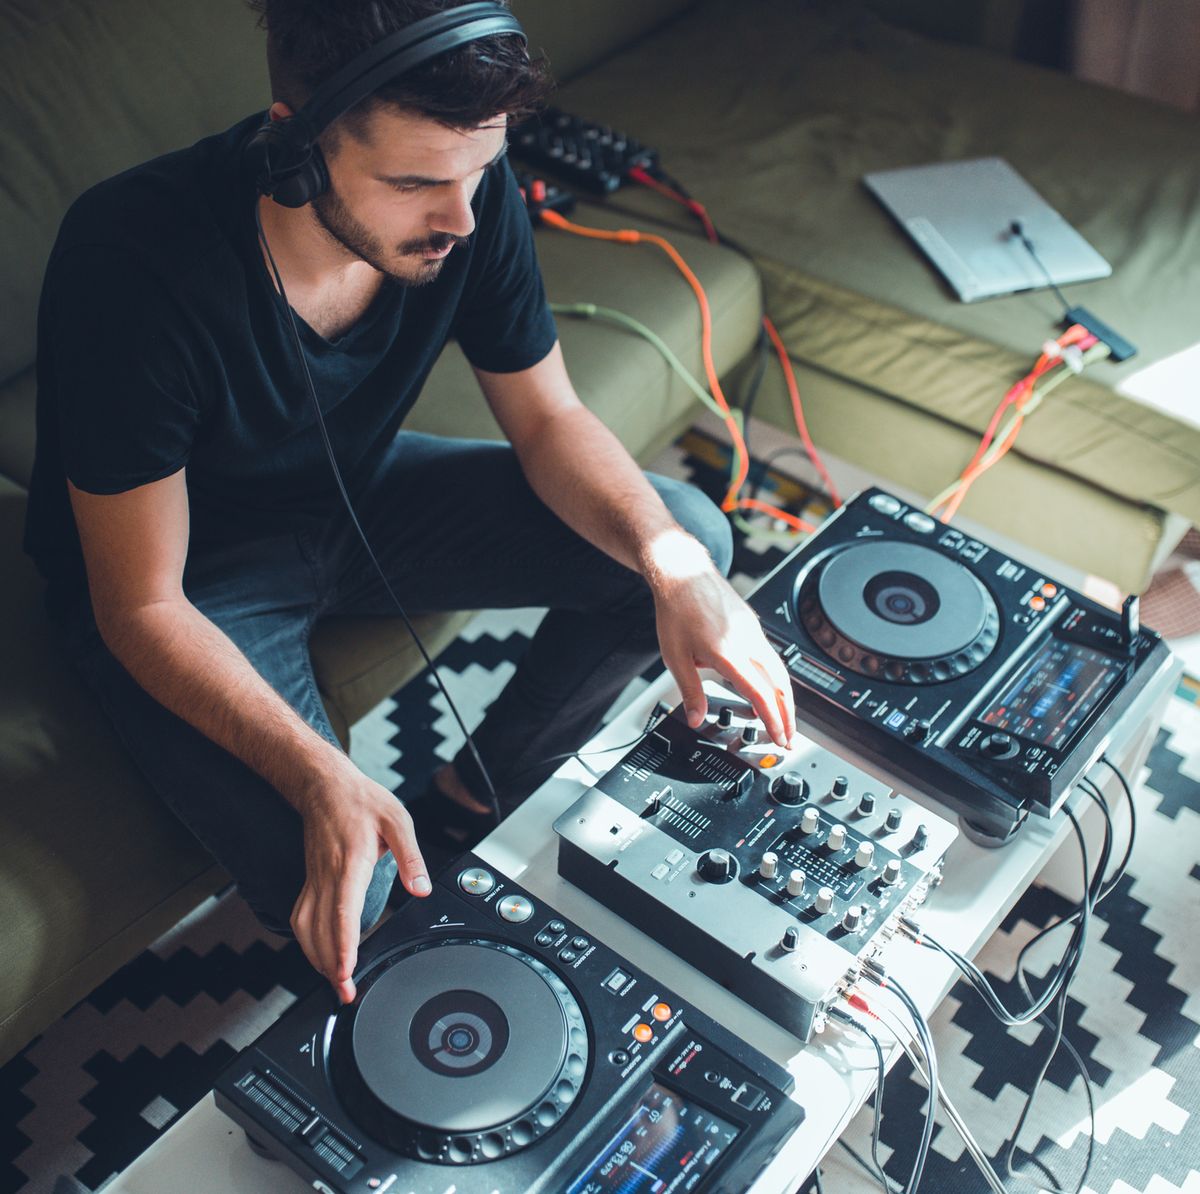 Mejor controladora de DJ: tips para elegirla